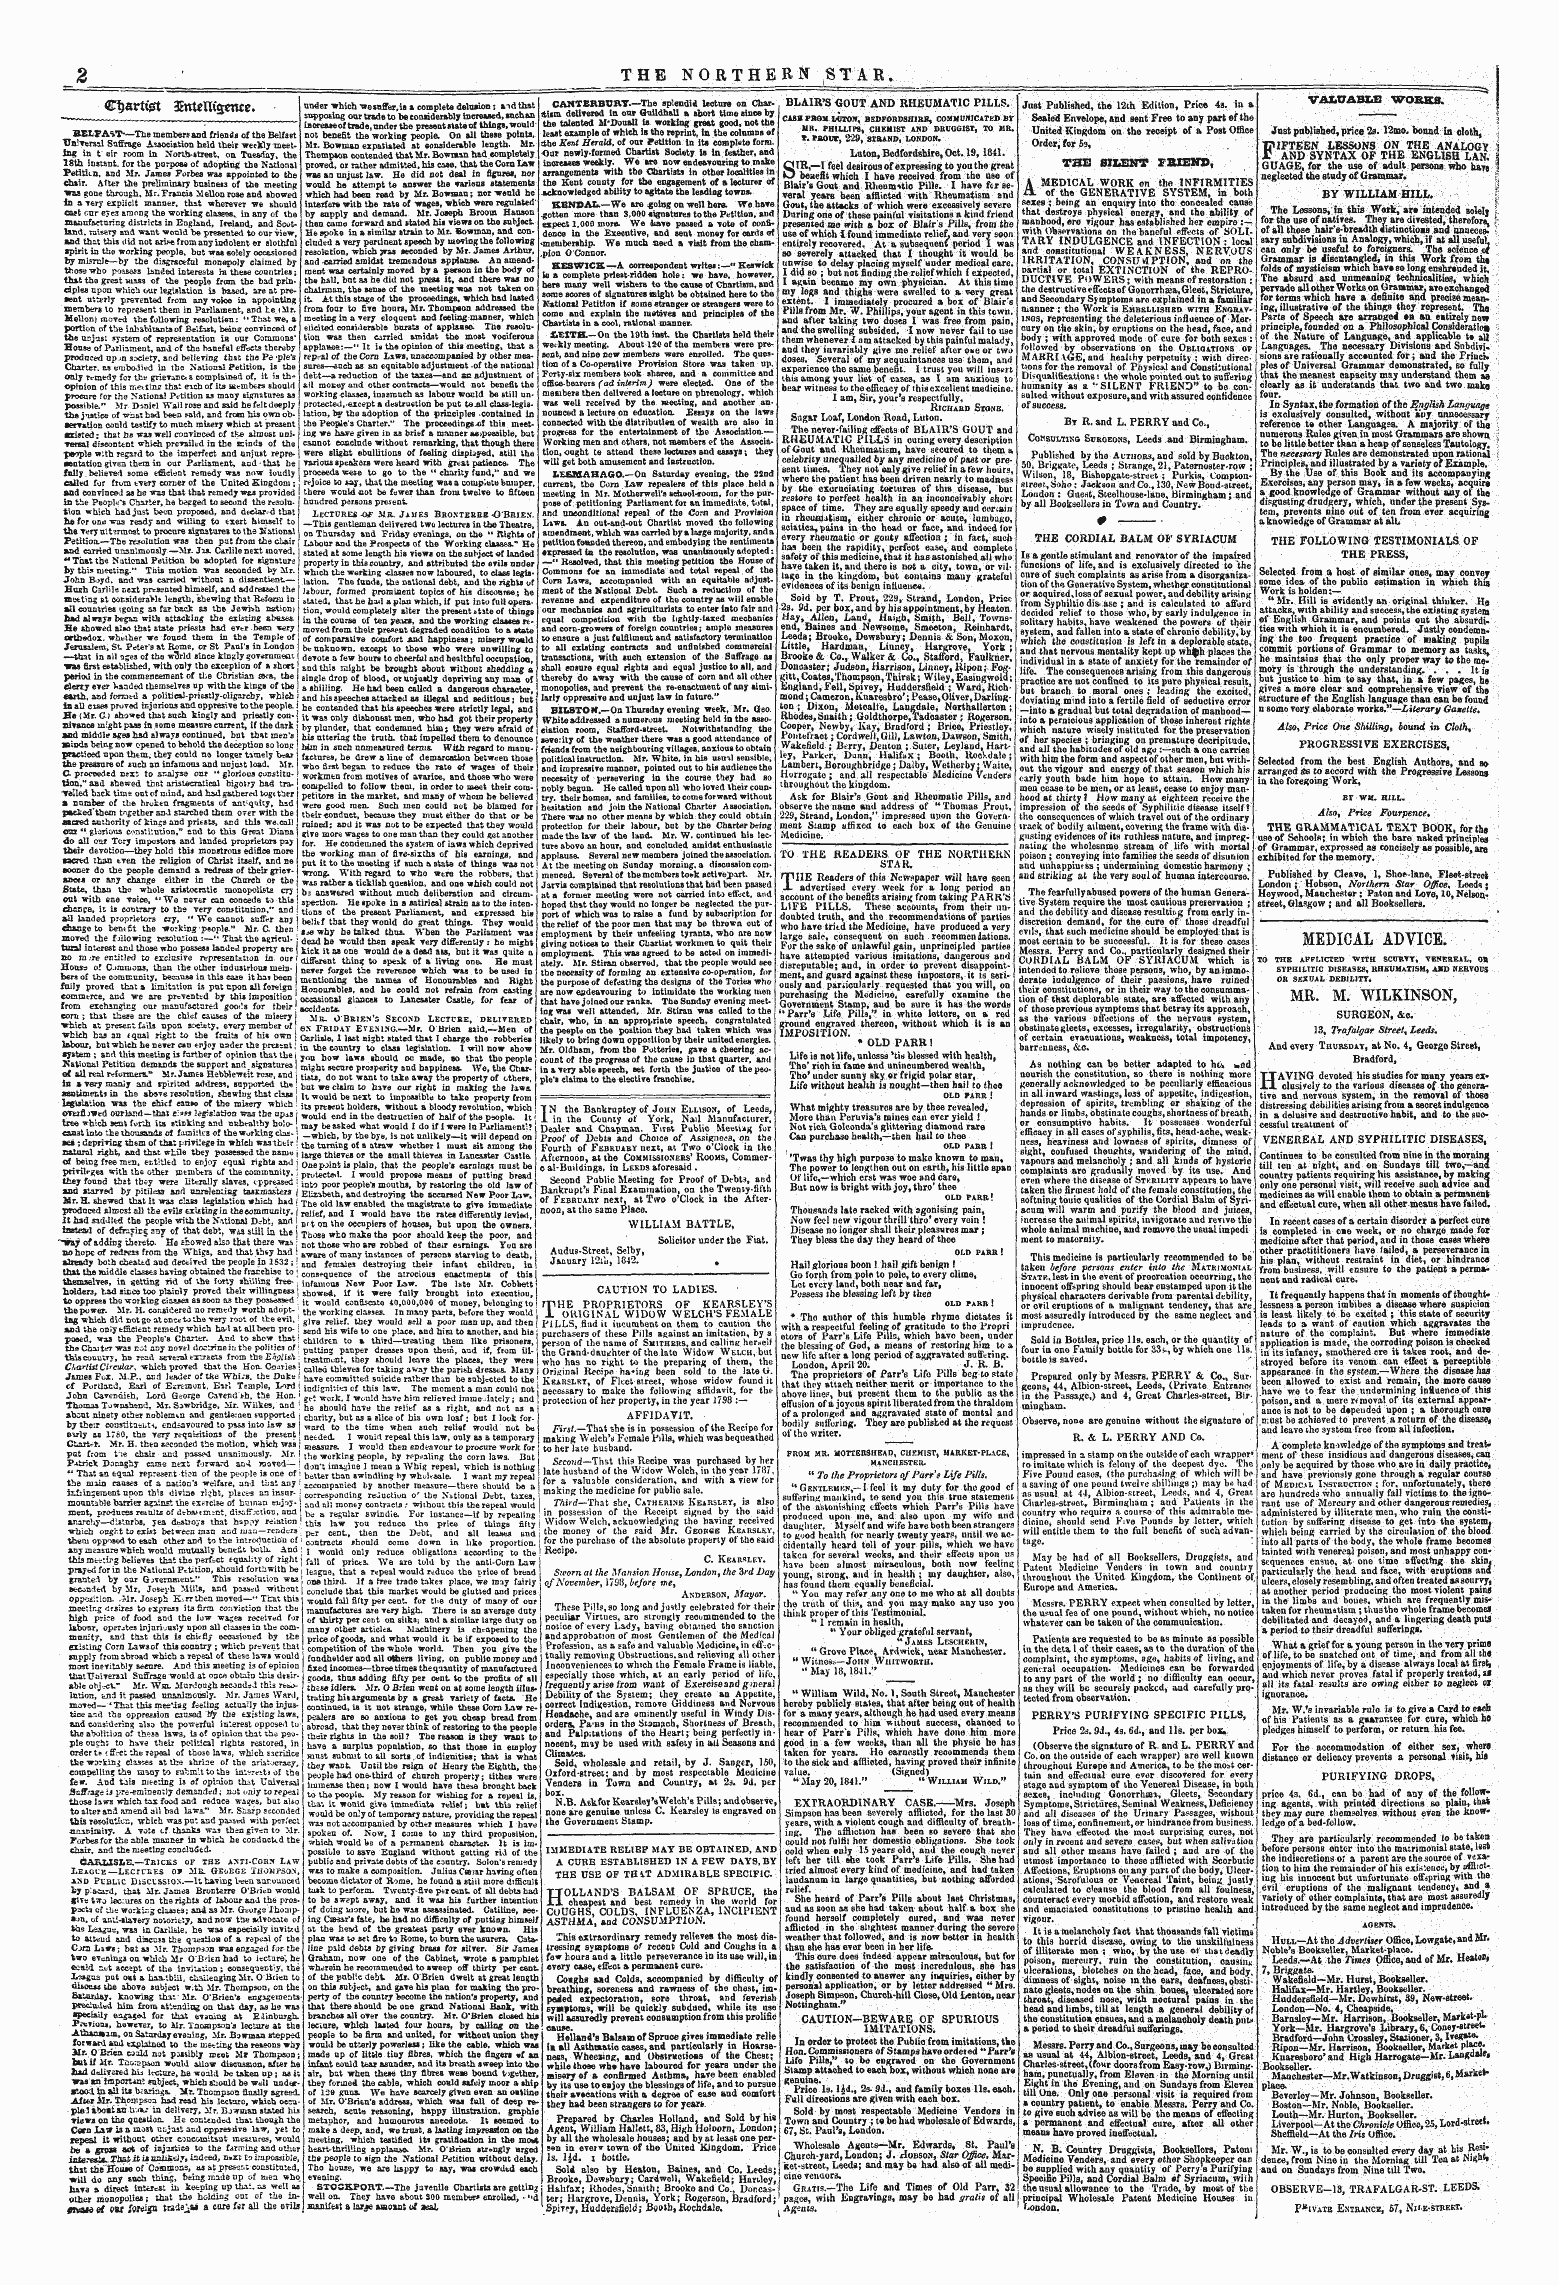 Northern Star (1837-1852): jS F Y, 1st edition - C§Arttgt 3etttene«Ntt